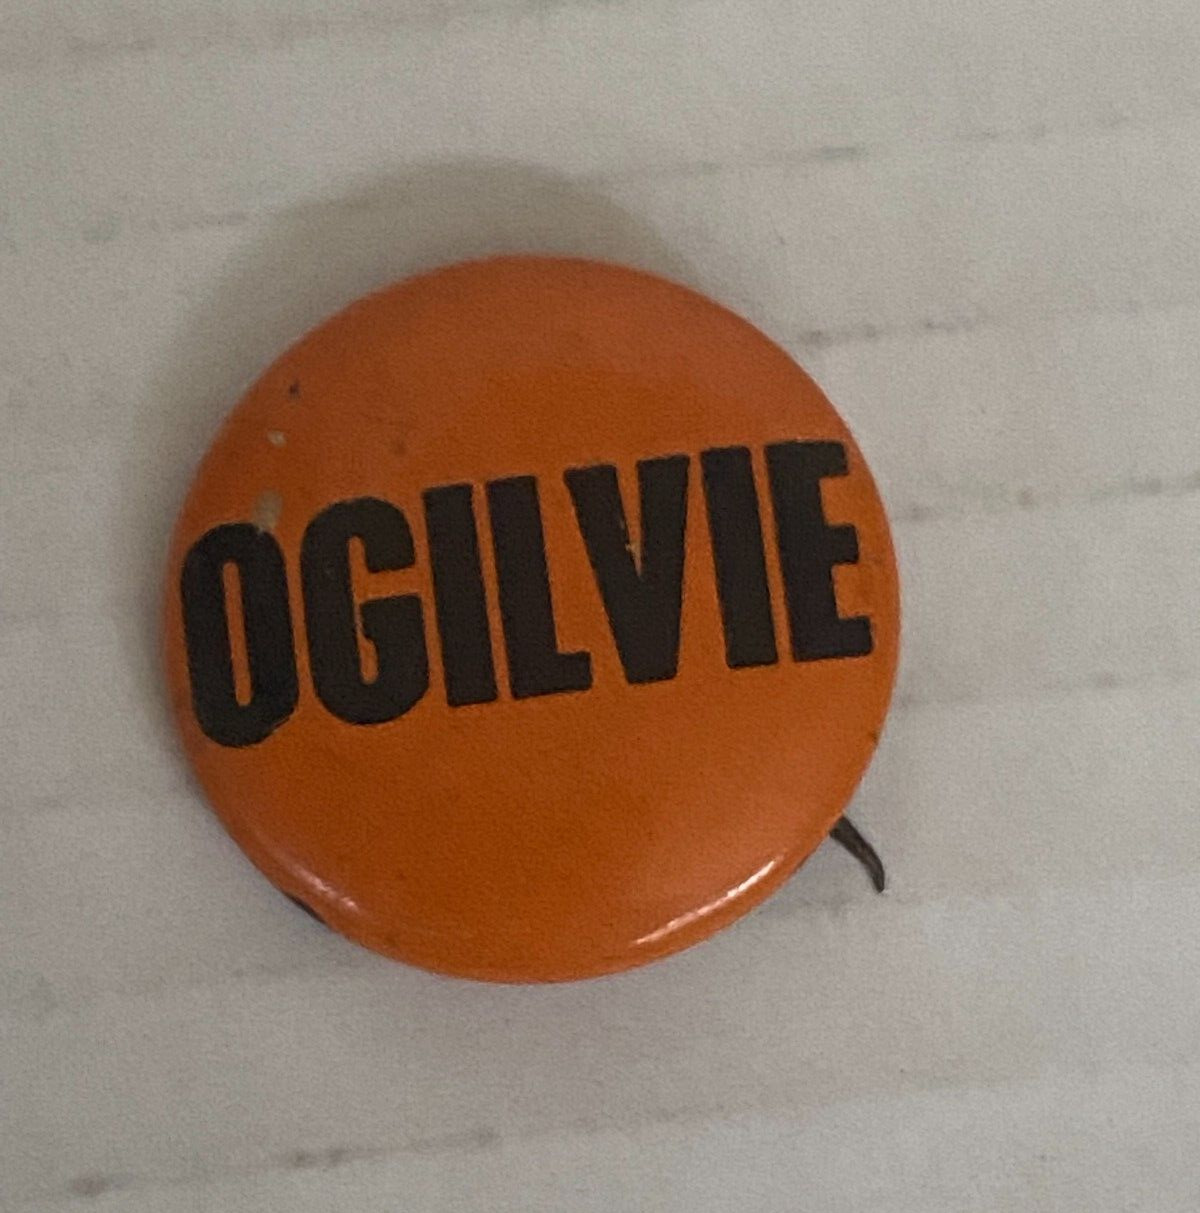 Vtg 1968 Richard Ogilvie Governor Illinois Campaign Pinback Pin Button 1\